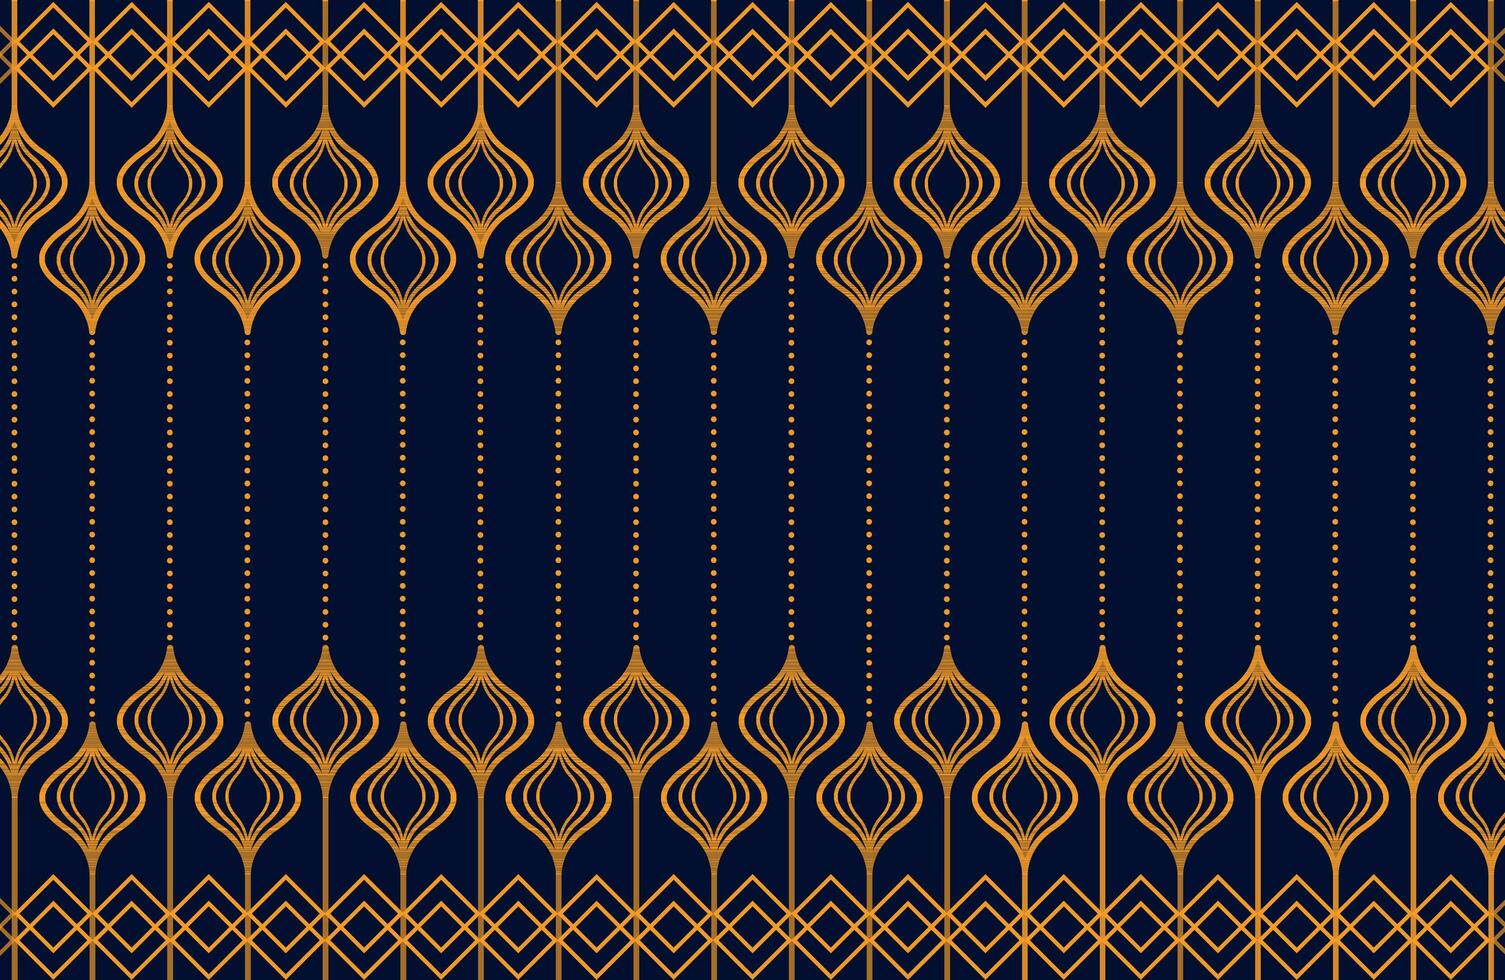 Golden fabric pattern design vector